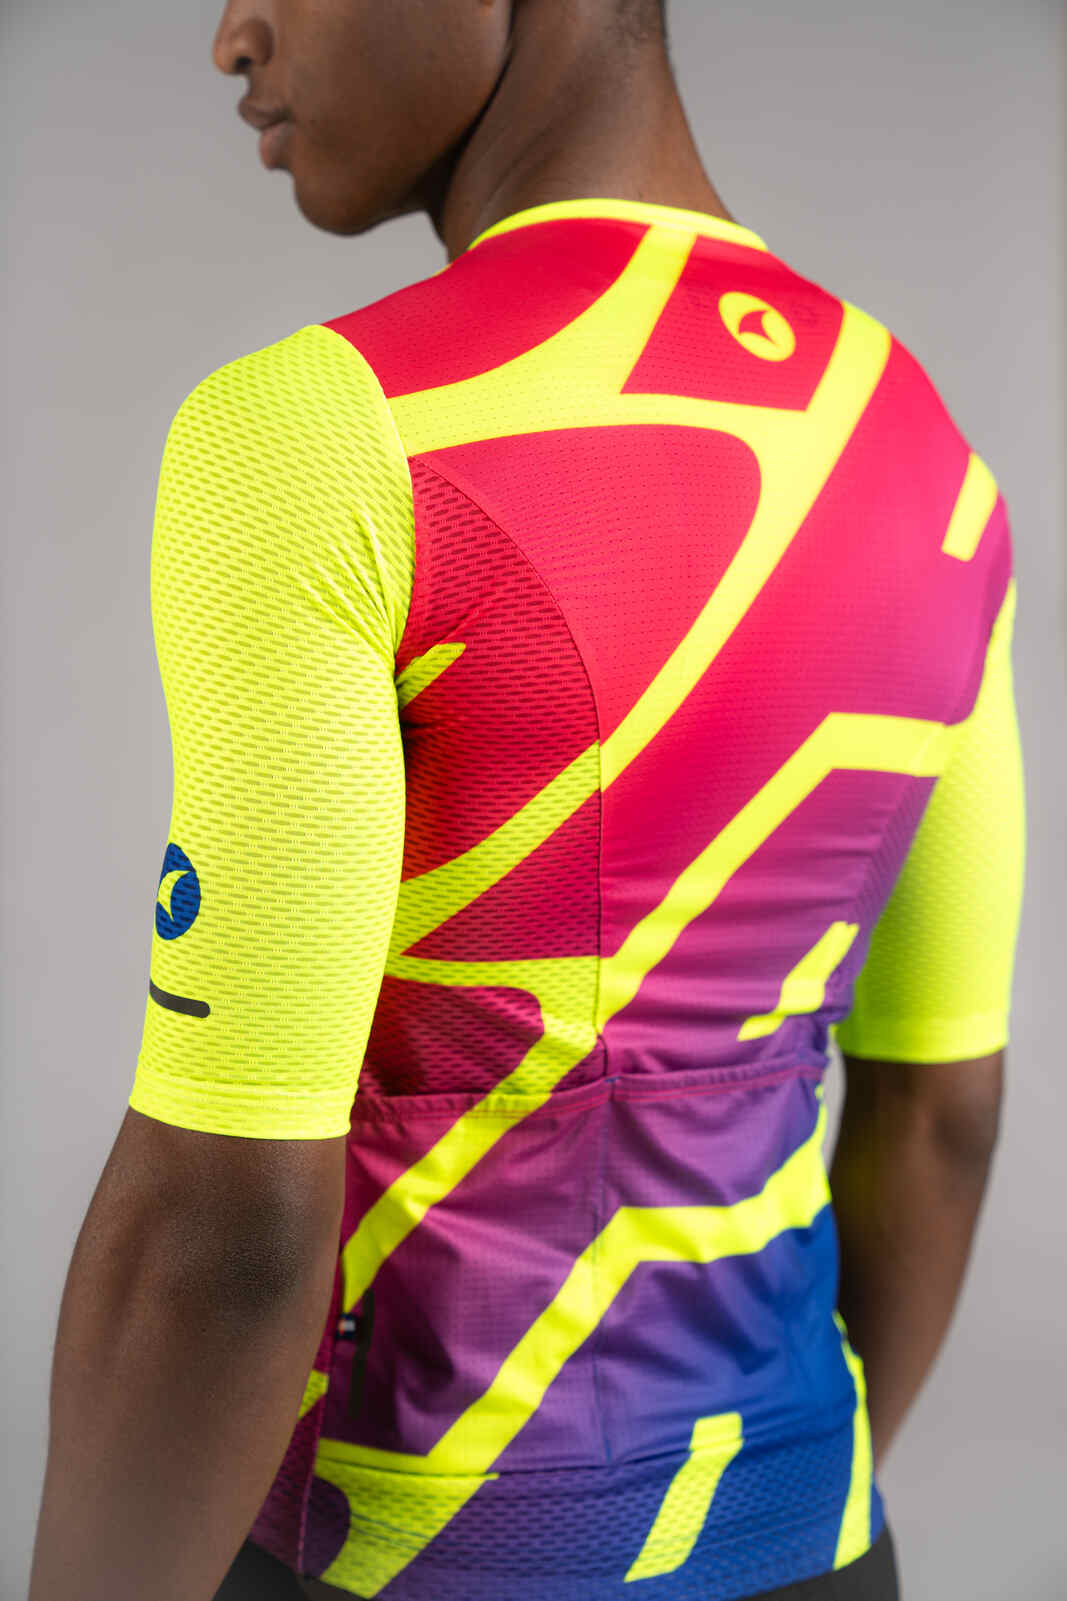 Men's High-Viz Yellow Mesh Cycling Jersey - Sleeve Close-Up